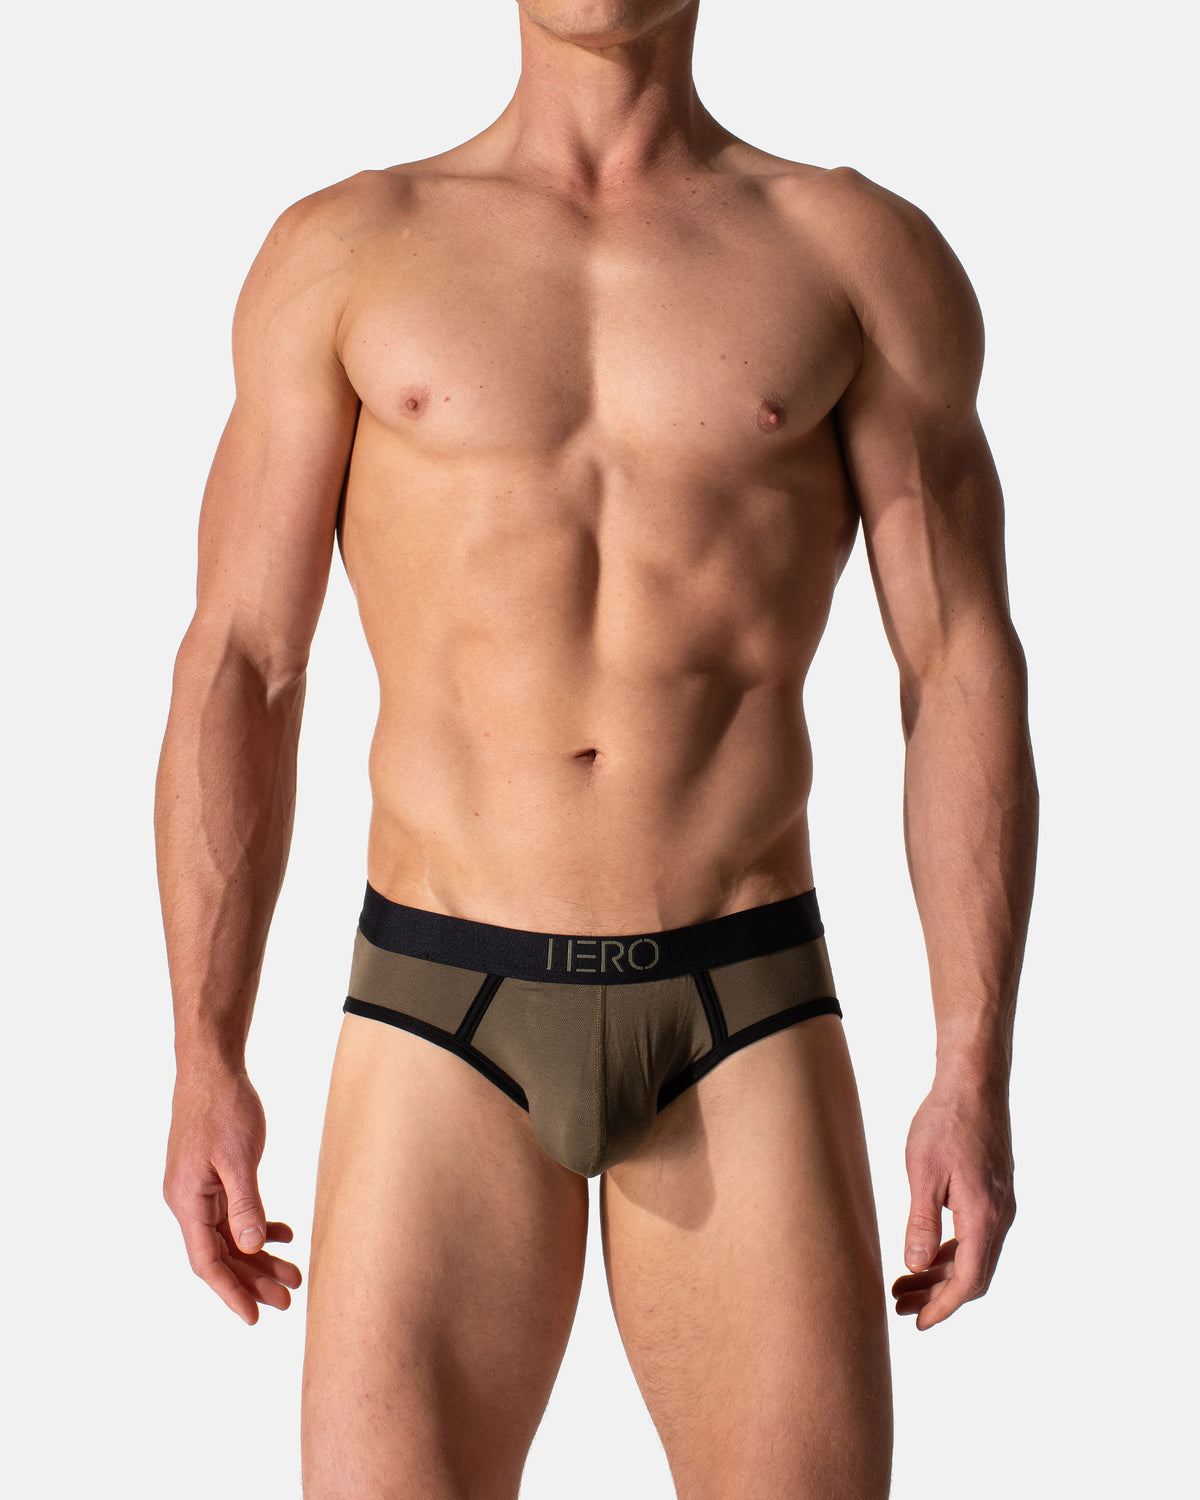 Khaki Men's Butt lifting underwear